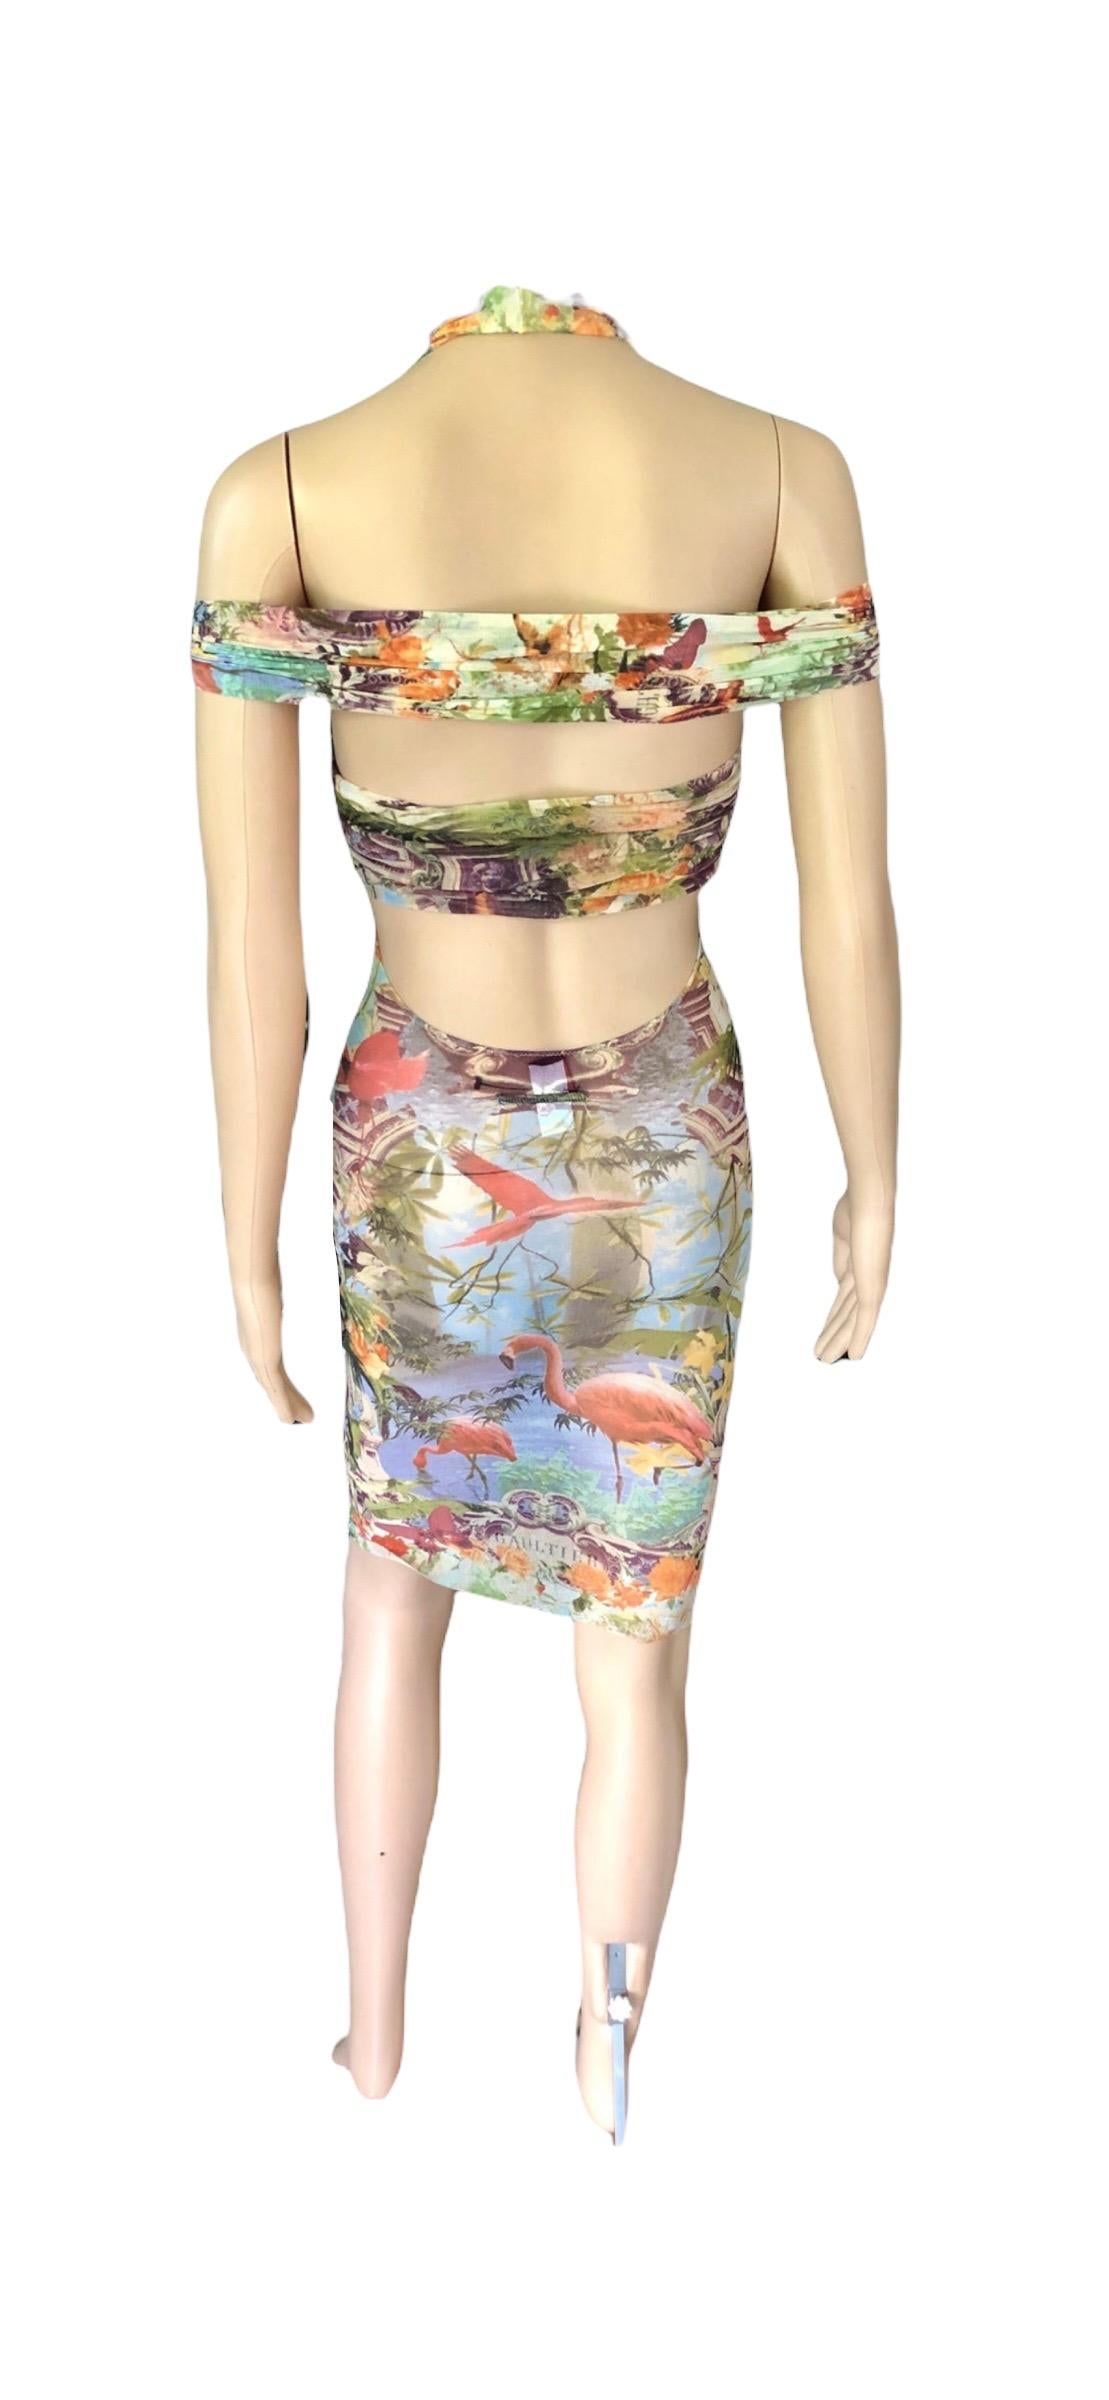 Jean Paul Gaultier Soliel S/S1999 Flamingo Tropical Cutout Sheer Mesh Mini Dress For Sale 1